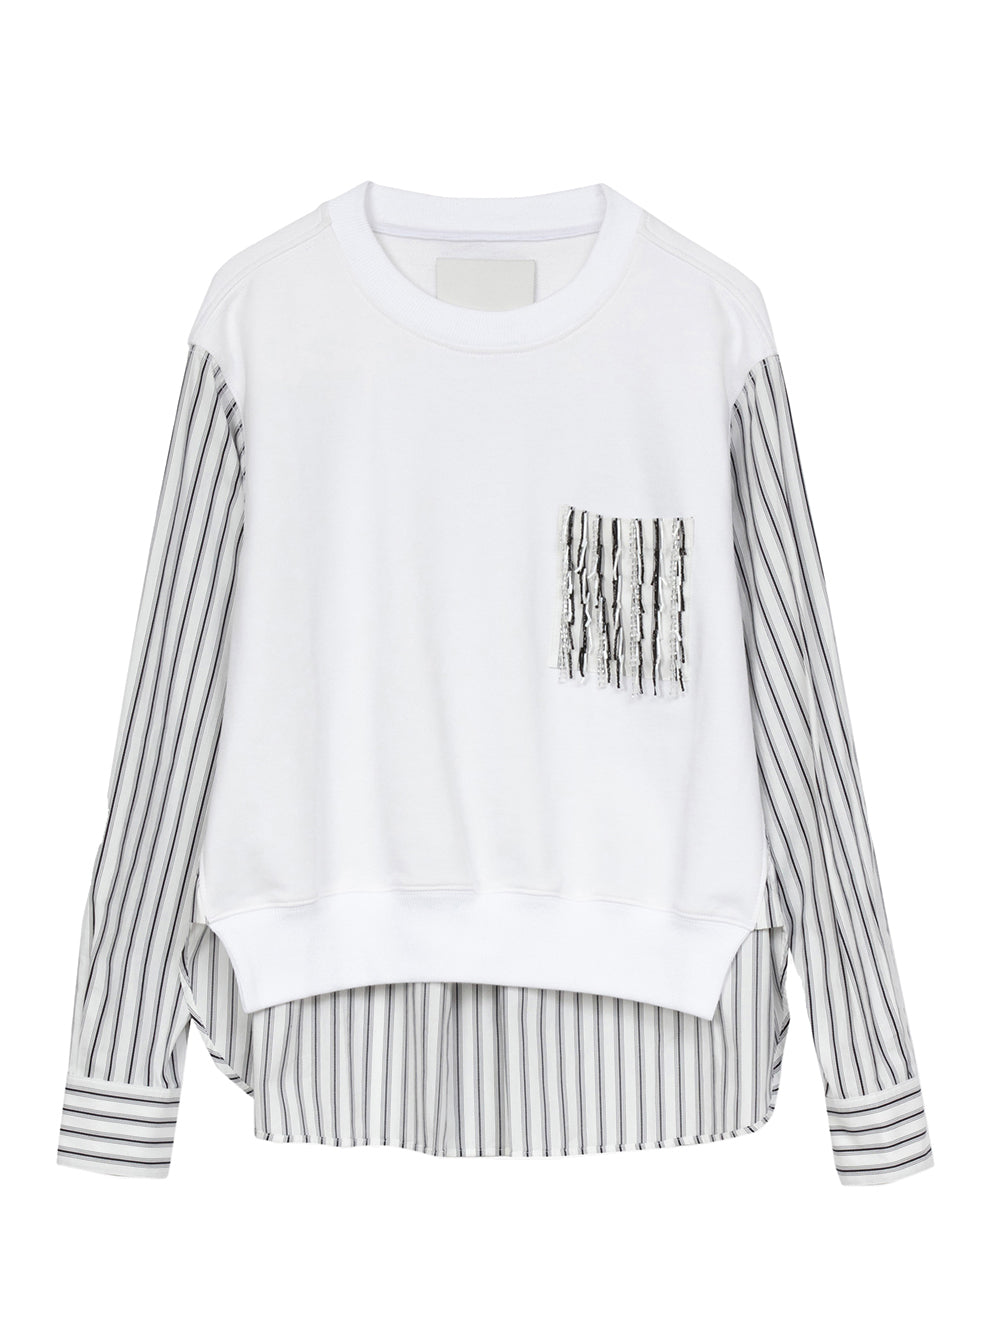 Striped Fringe Trim Sweatshirt (White Multi Stripe)